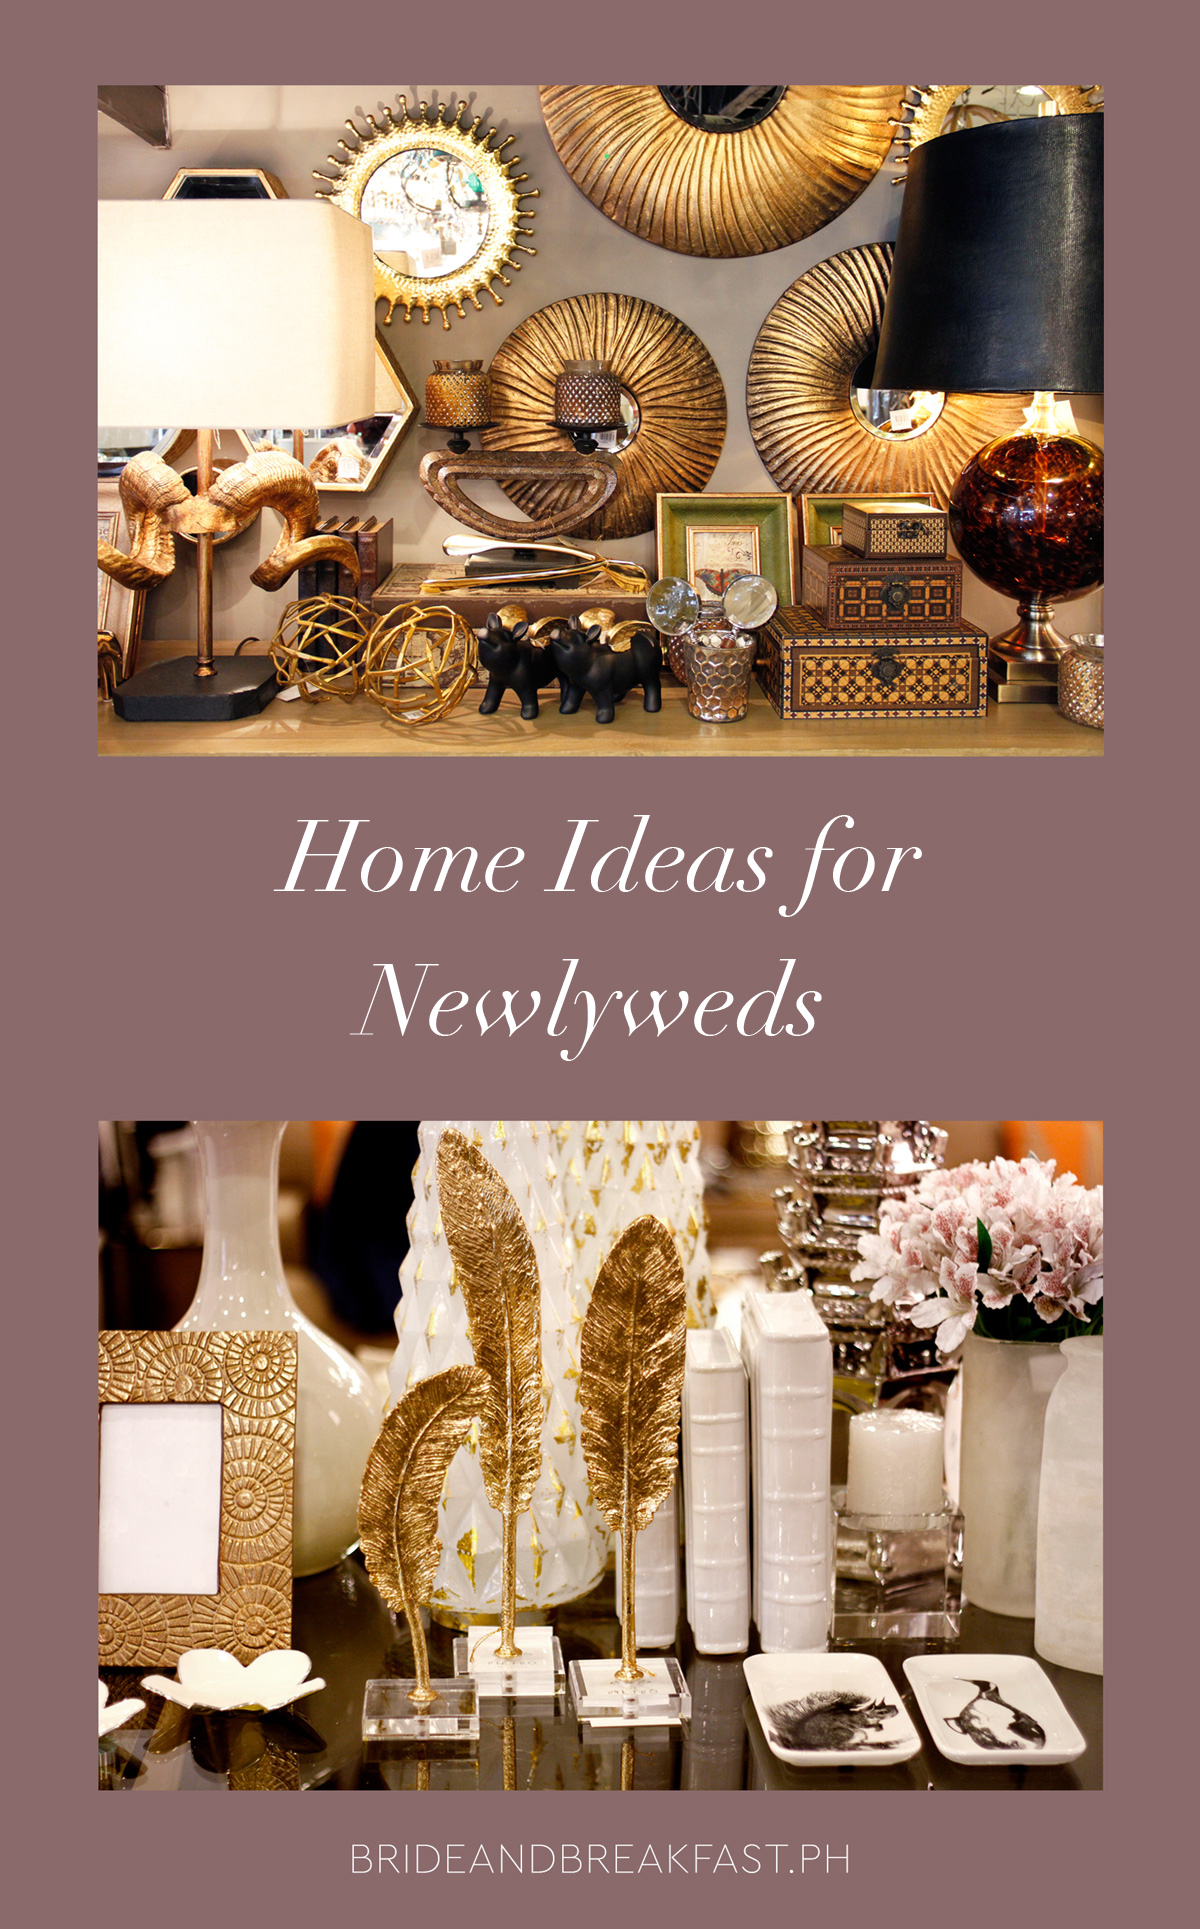  Home Decor Ideas for Newlyweds  Philippines Wedding Blog